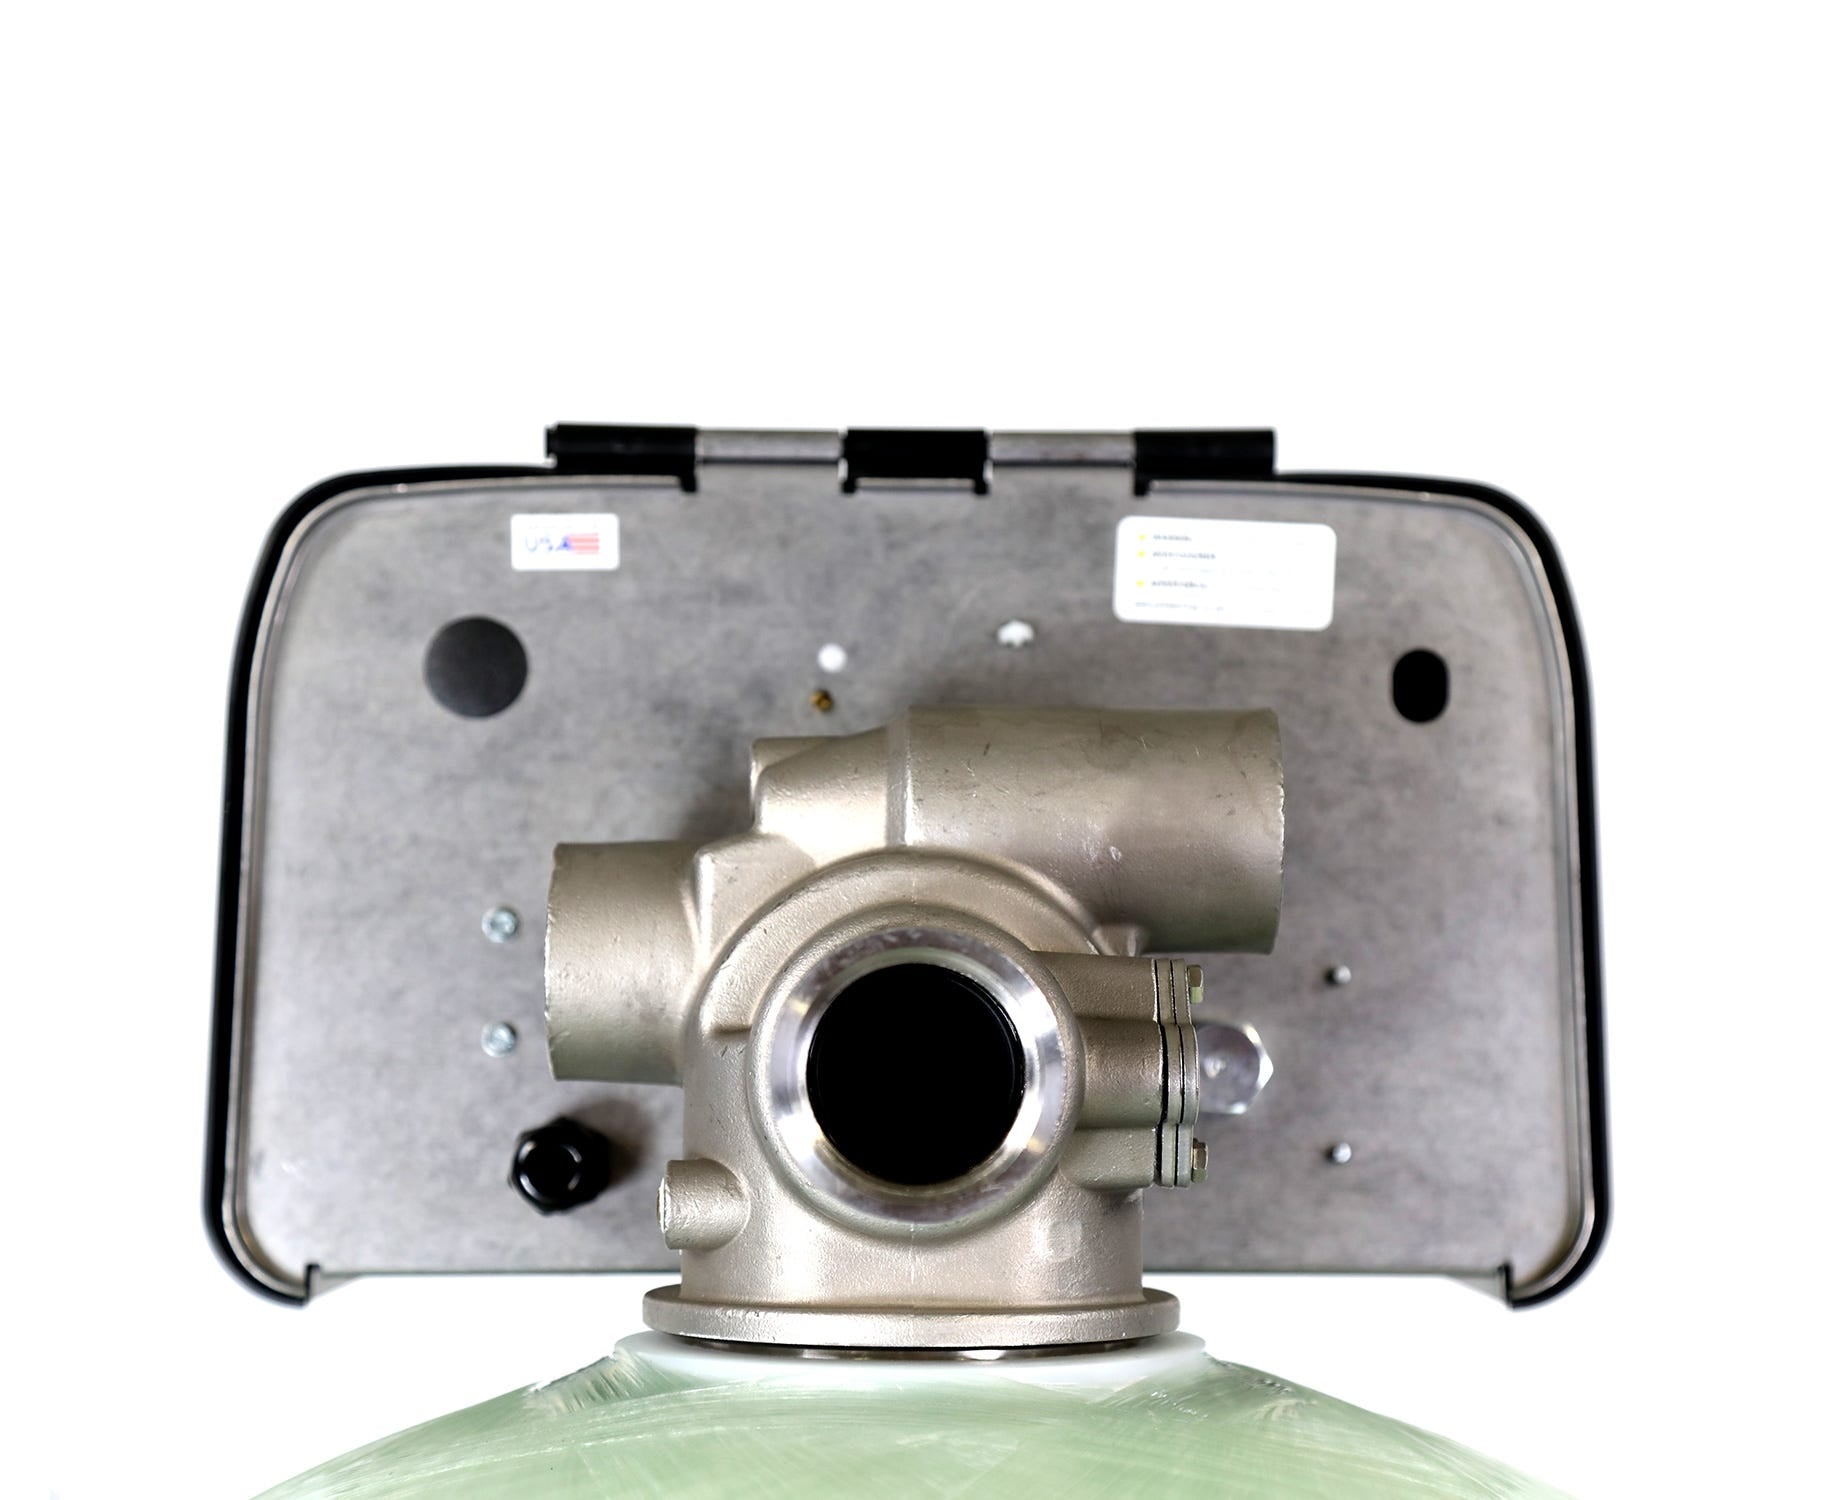 Fleck 2815 1.5" Single Tank Commercial Metered Water Softener